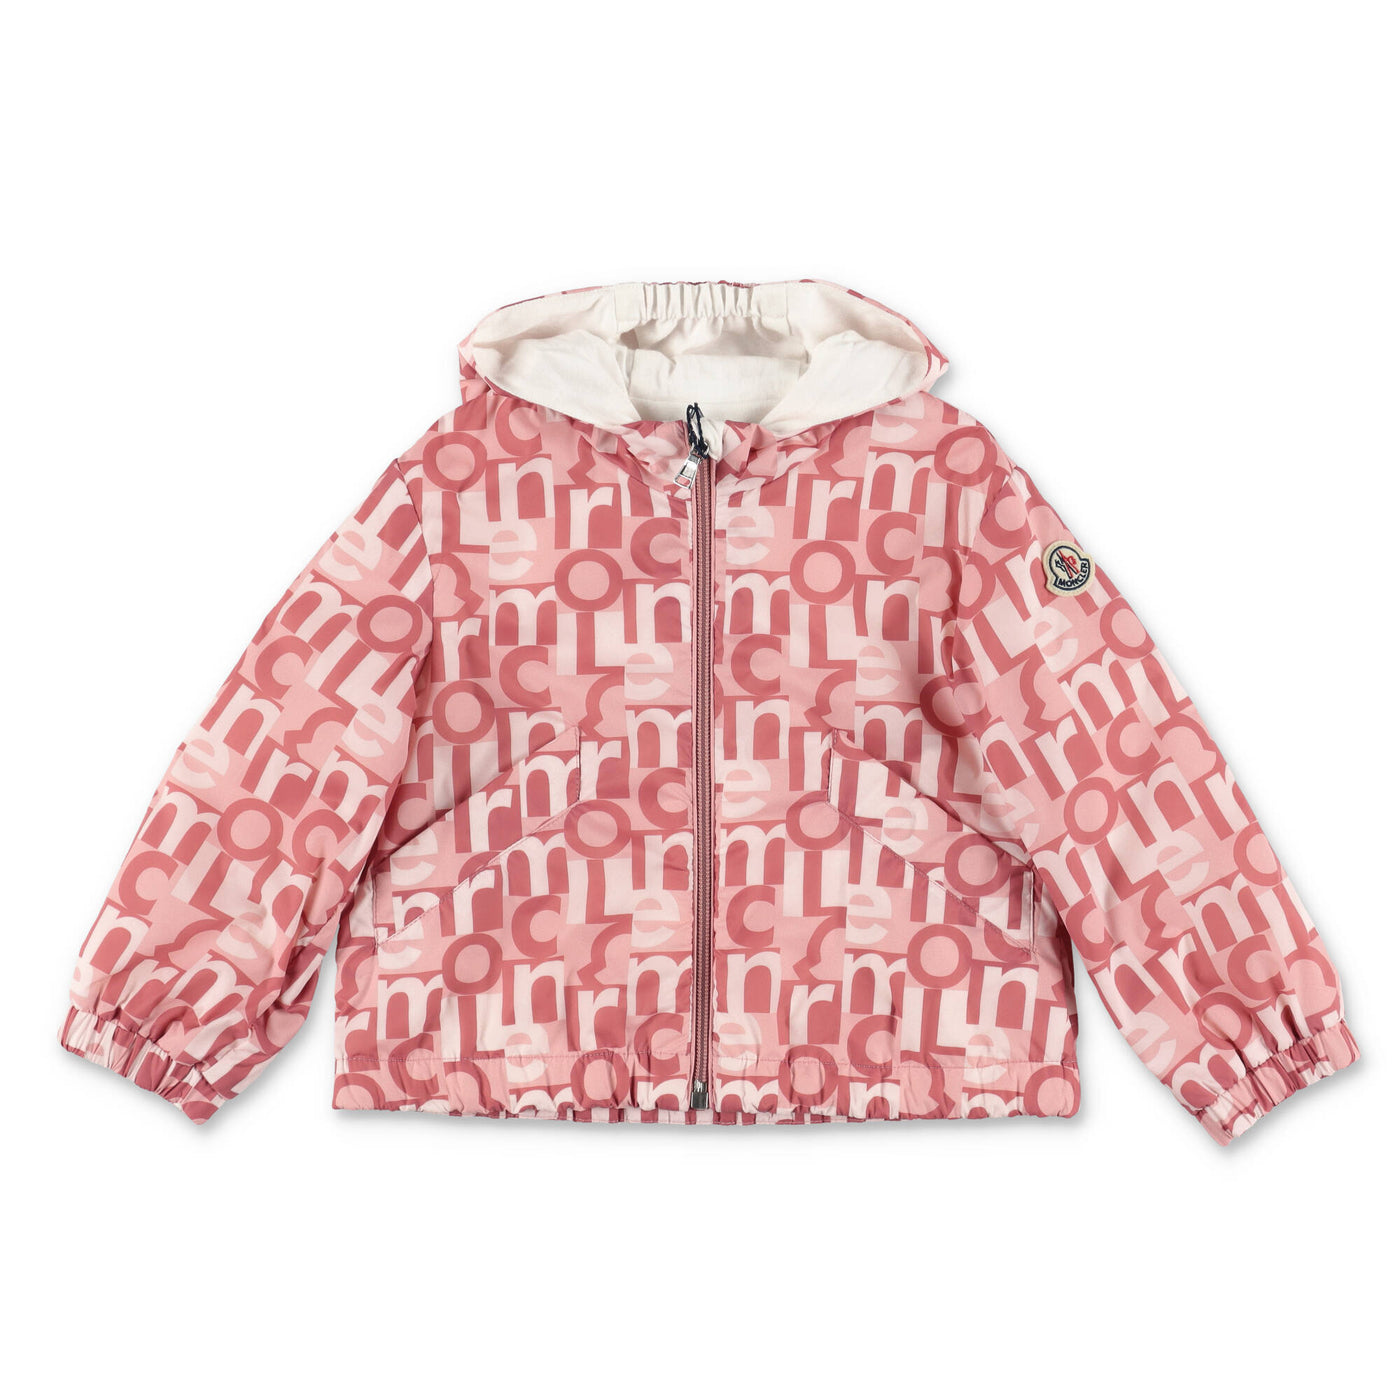 VERNANT pink logo nylon baby girl MONCLER hooded jacket - Carofiglio Junior